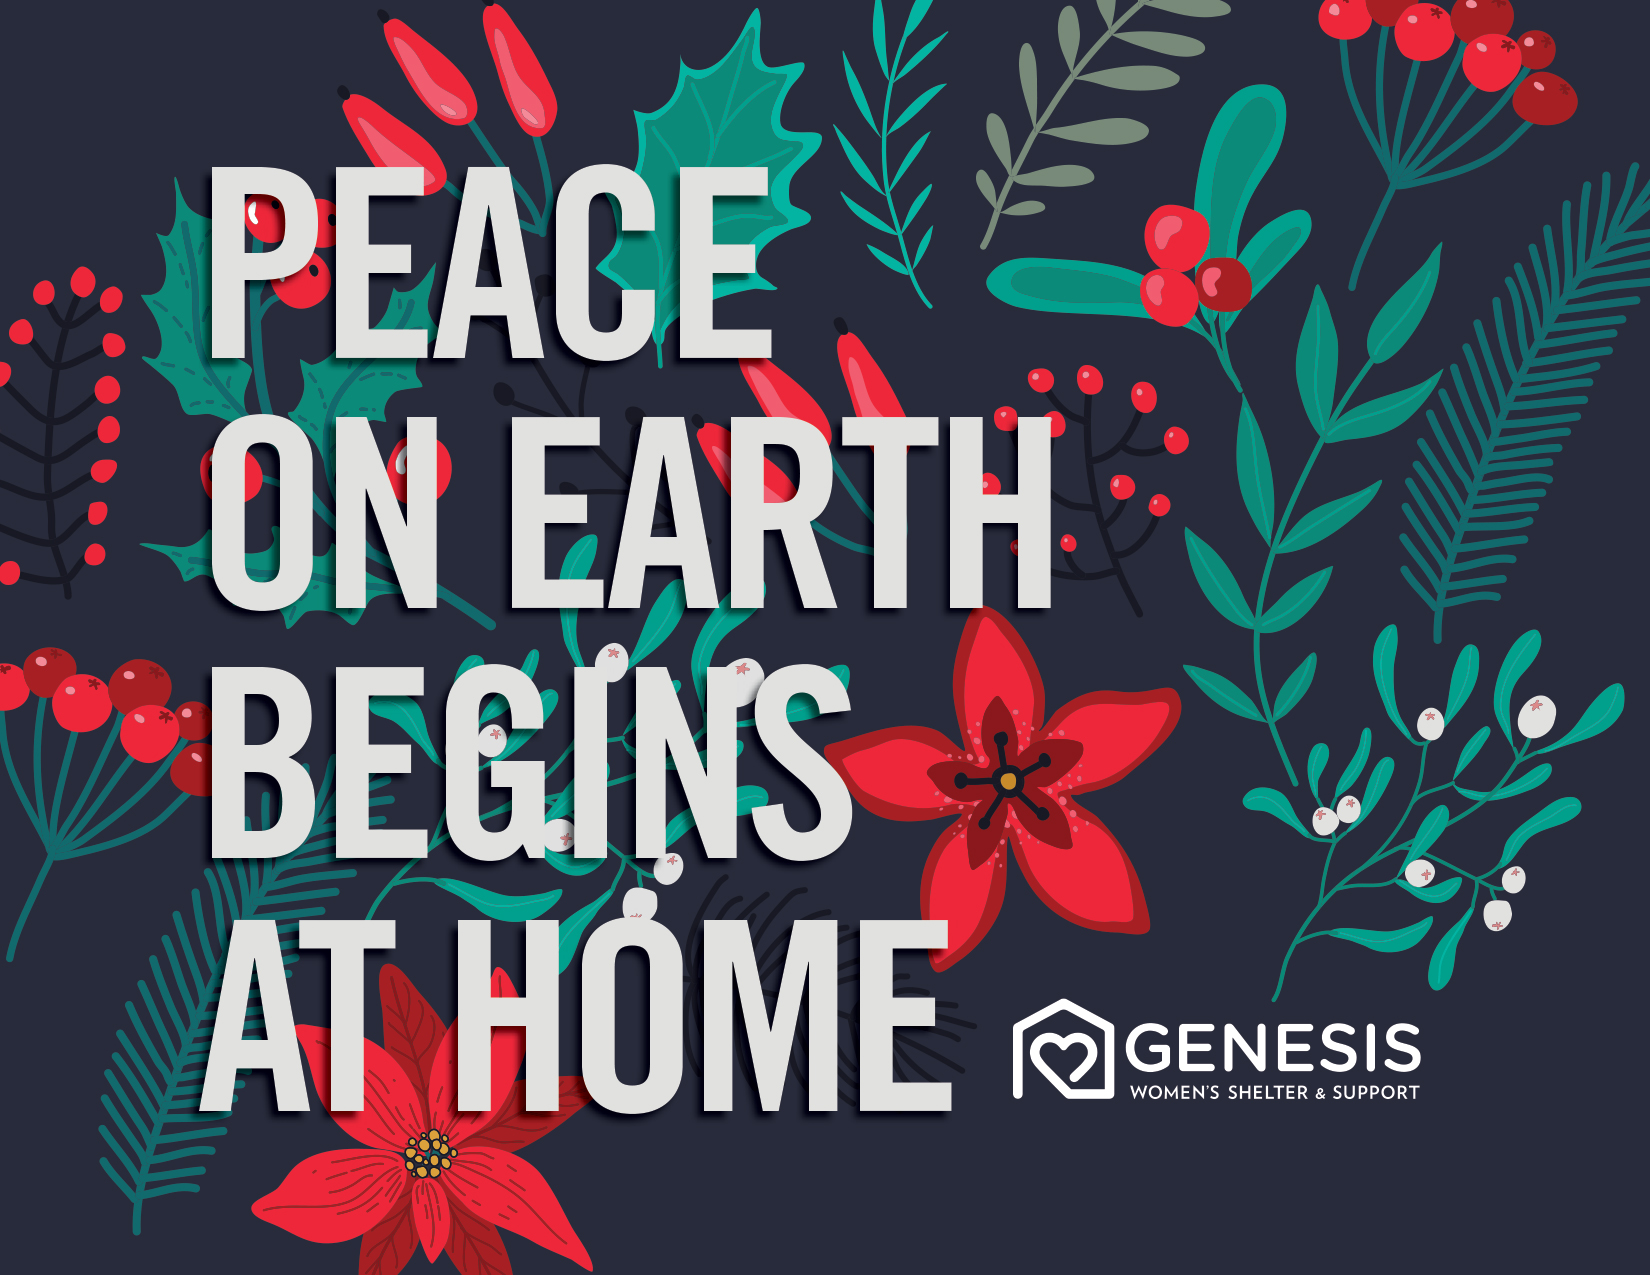 Genesis Holiday tribute card